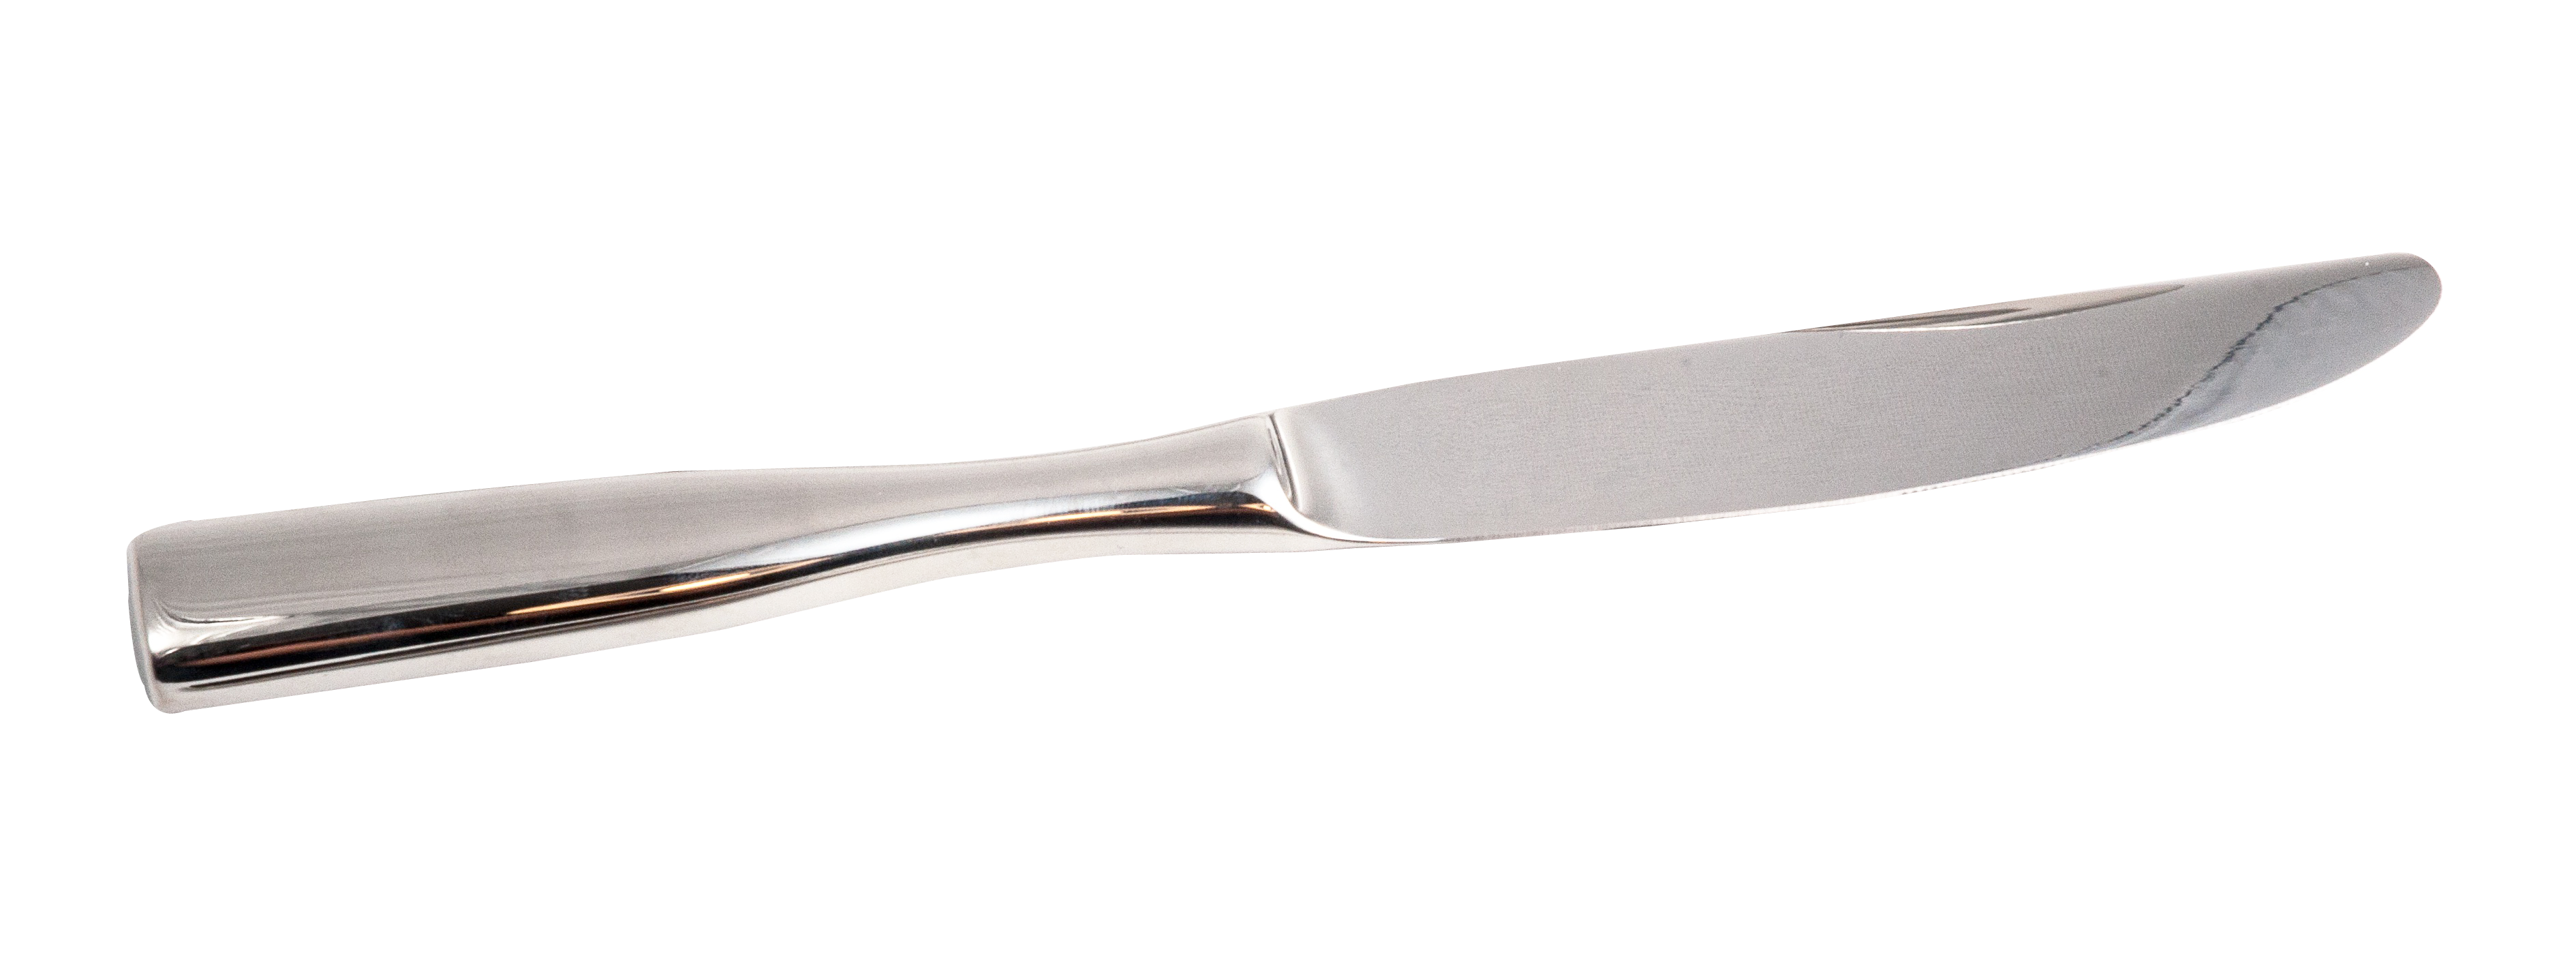 Steel Stab Butter Utensil Scalpel PNG